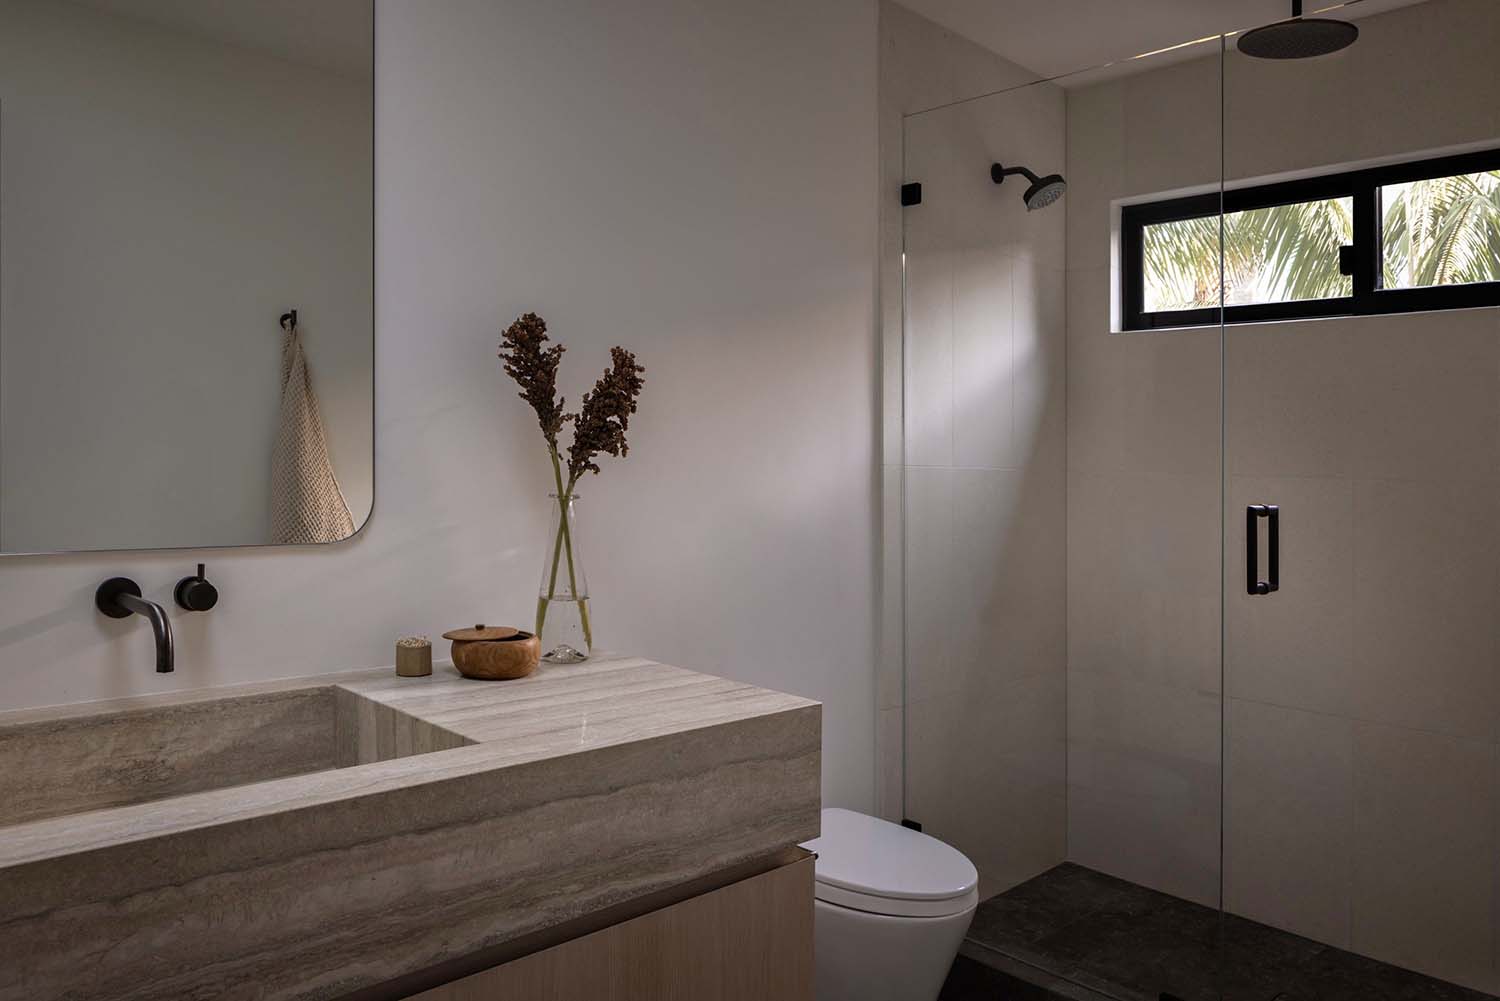 midcentury modern bathroom vanity and glass enclosed shower